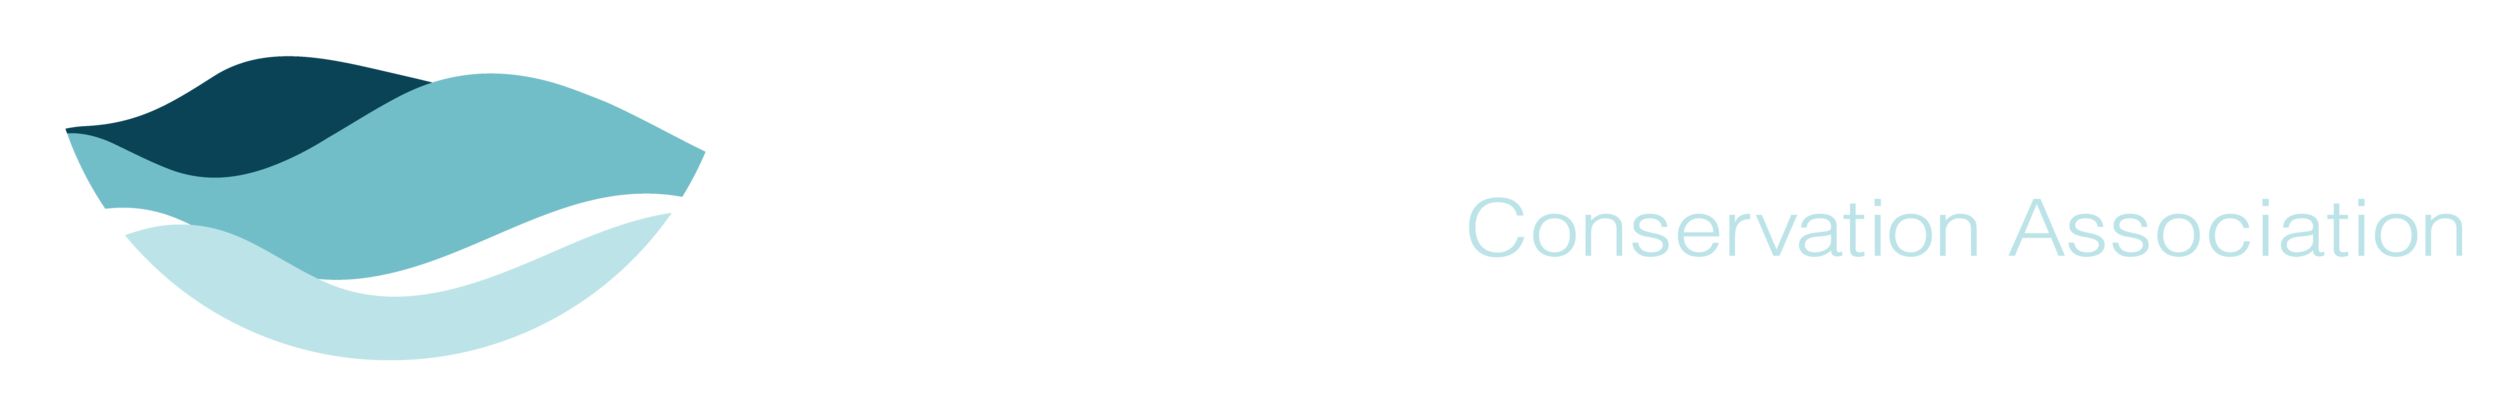 Paudash Lake Conservation Association